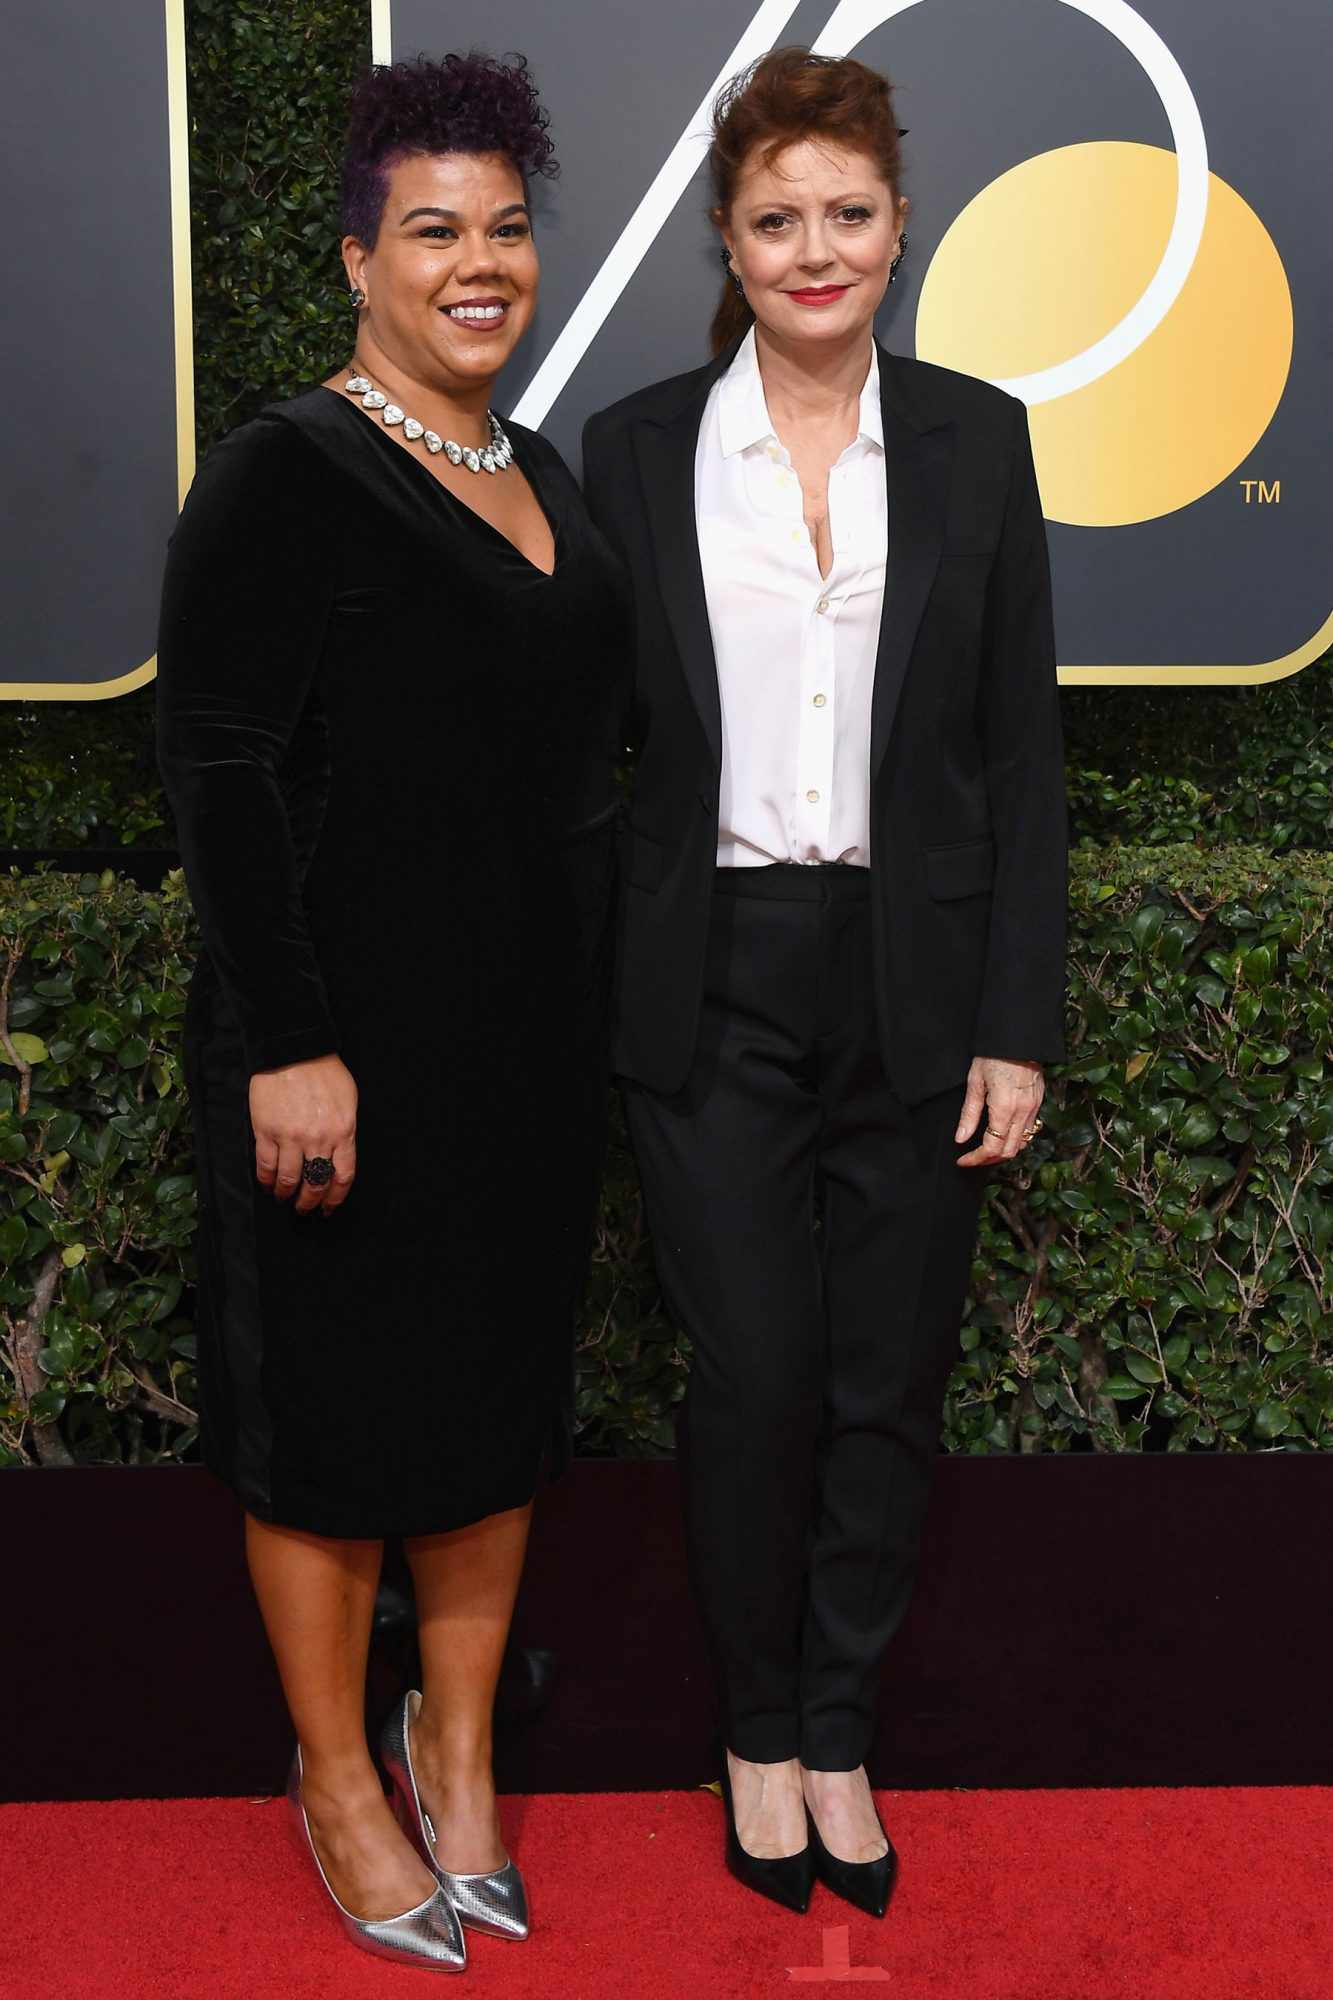 NBC's "75th Annual Golden Globe Awards" - Arrivals